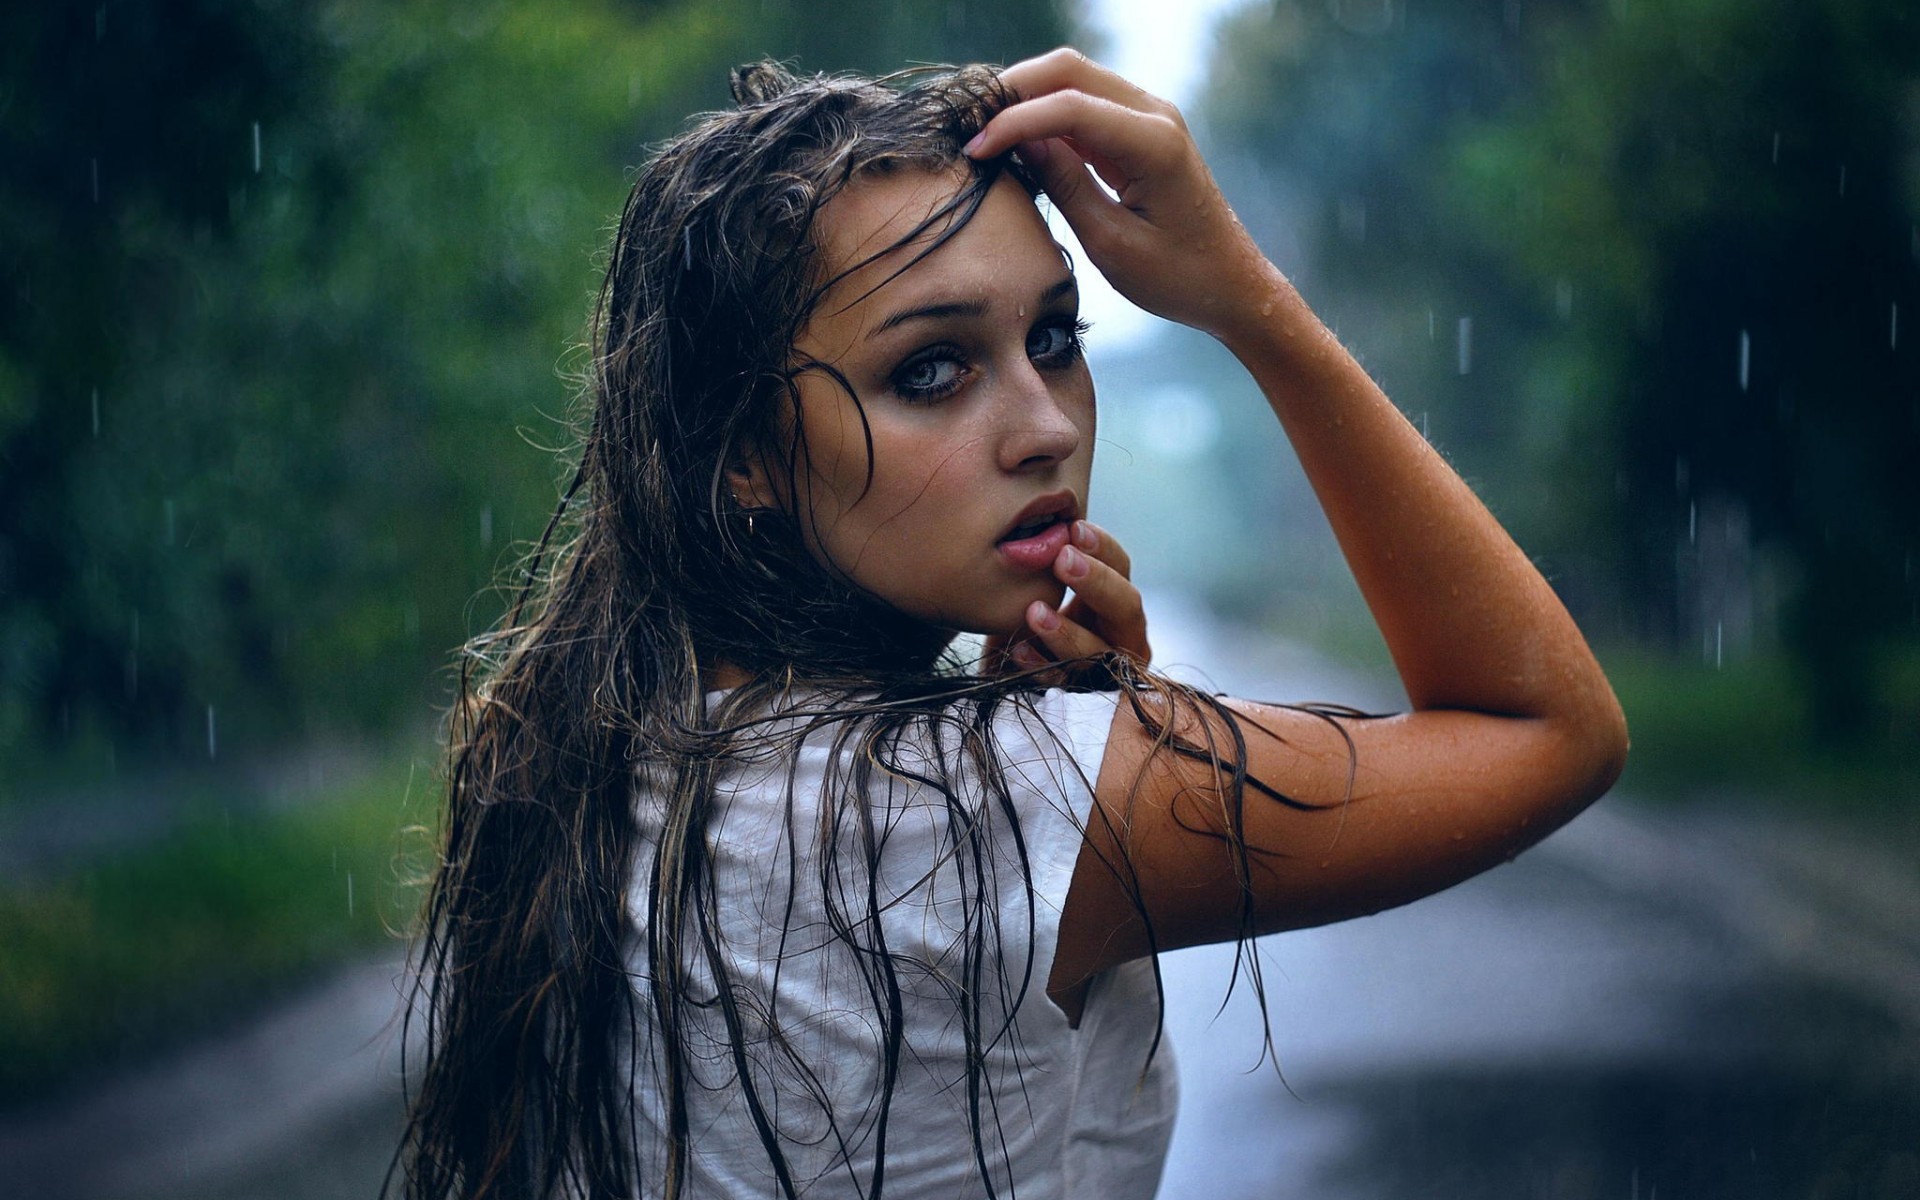 #women Outdoors, #wet Body, #wet Hair, #brunette, #women, - Face In The Rain , HD Wallpaper & Backgrounds